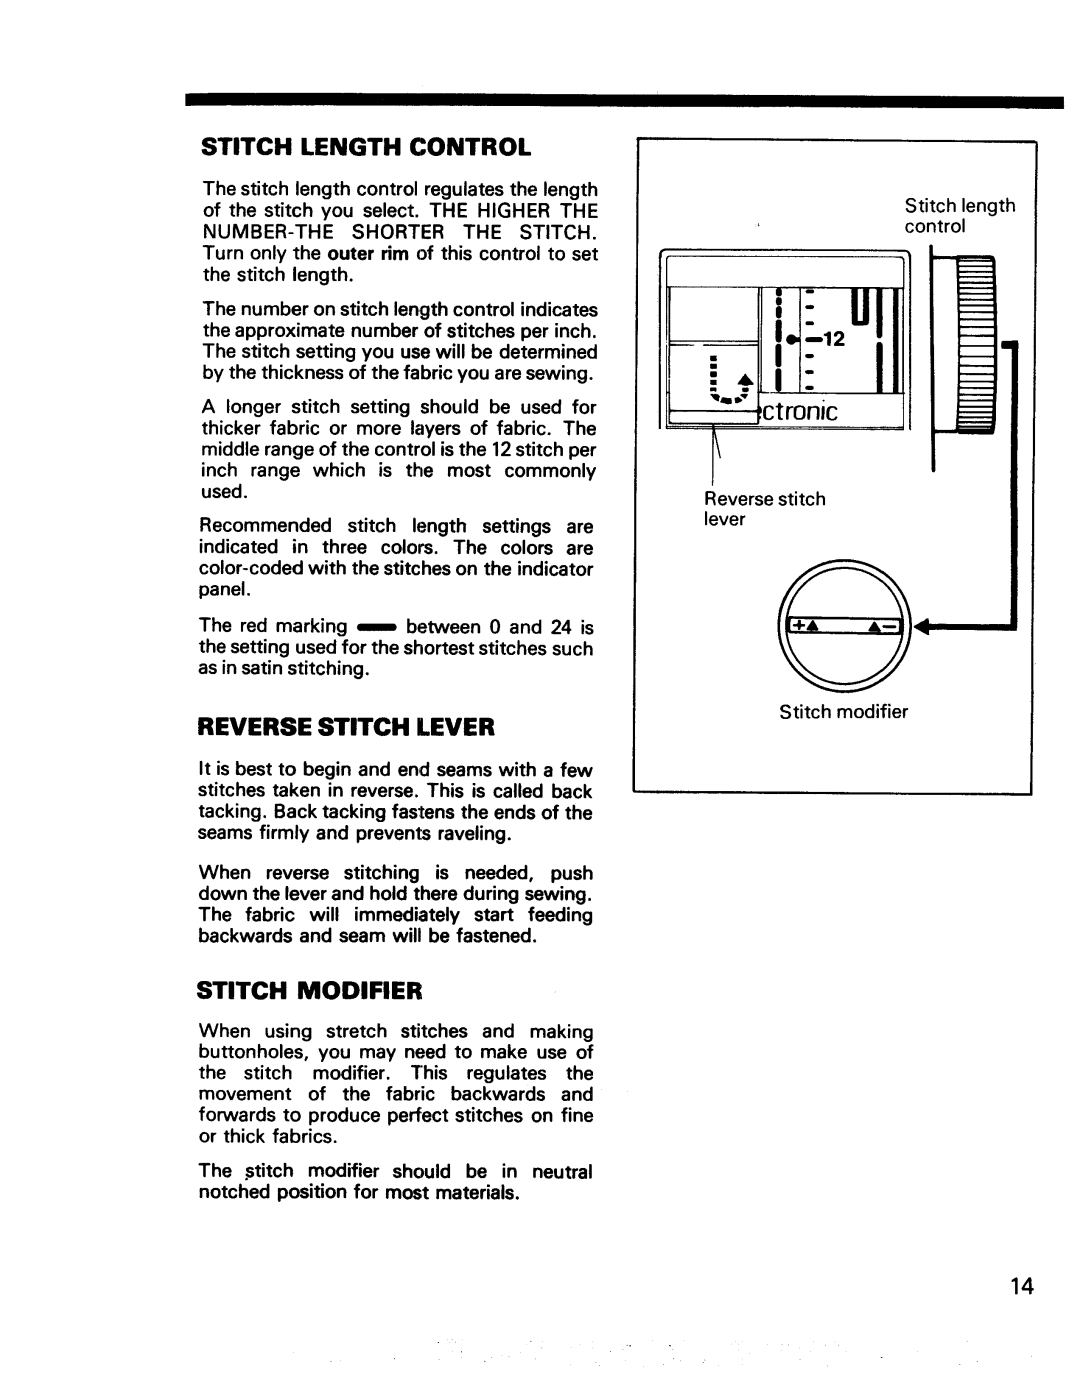 Kenmore 17922, 17920 manual ctronic, Reverse Stitch Lever, Stitch Length Control, Stitch Modifier 